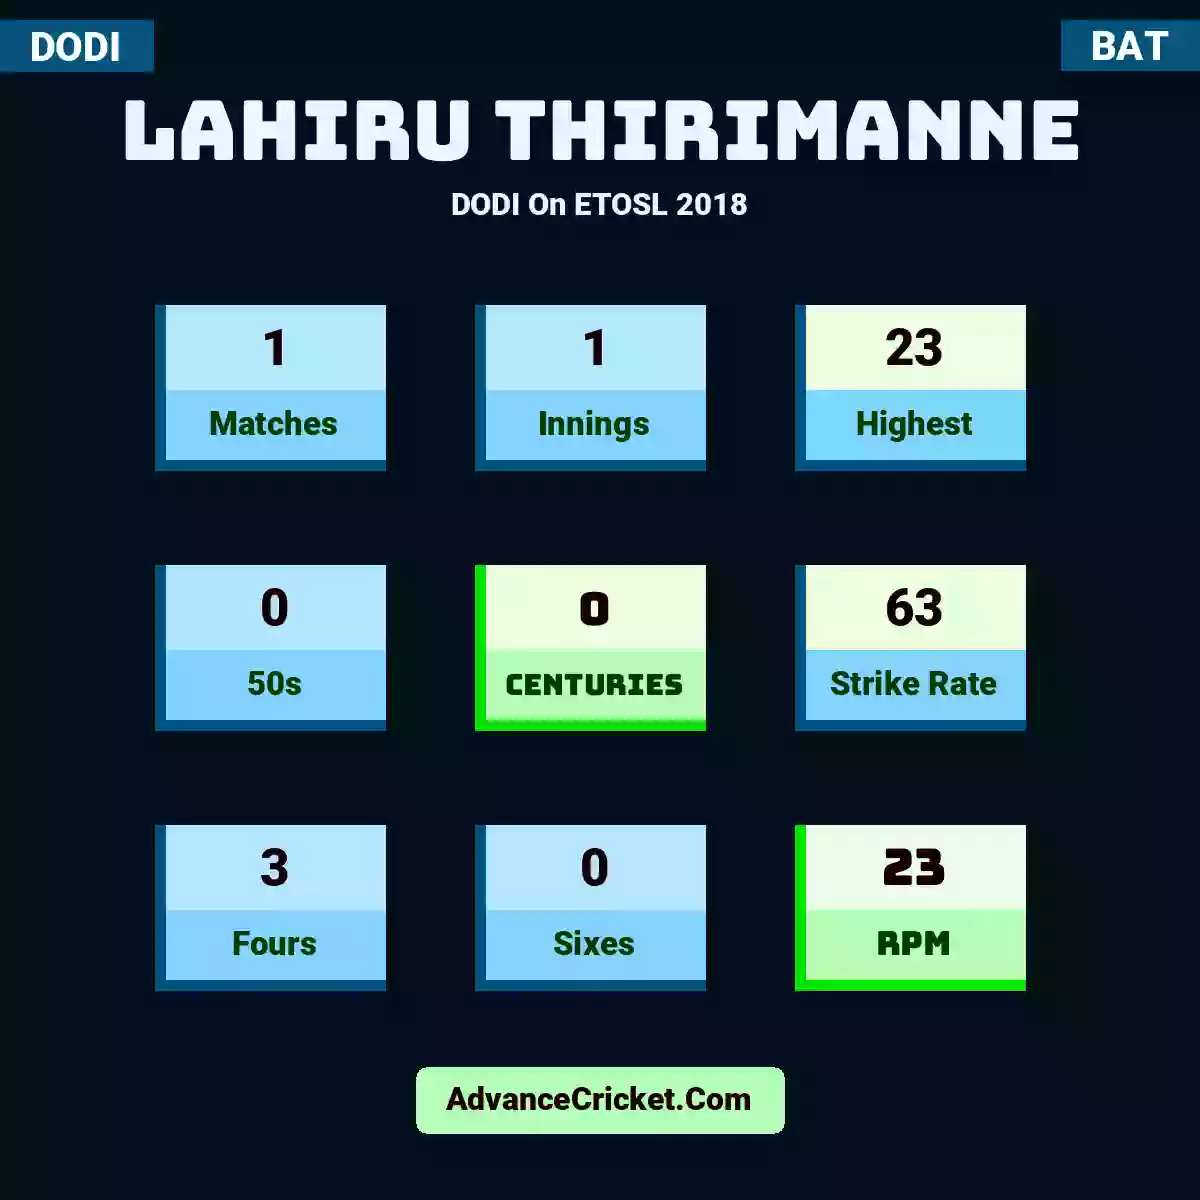 Lahiru Thirimanne DODI  On ETOSL 2018, Lahiru Thirimanne played 1 matches, scored 23 runs as highest, 0 half-centuries, and 0 centuries, with a strike rate of 63. L.Thirimanne hit 3 fours and 0 sixes, with an RPM of 23.